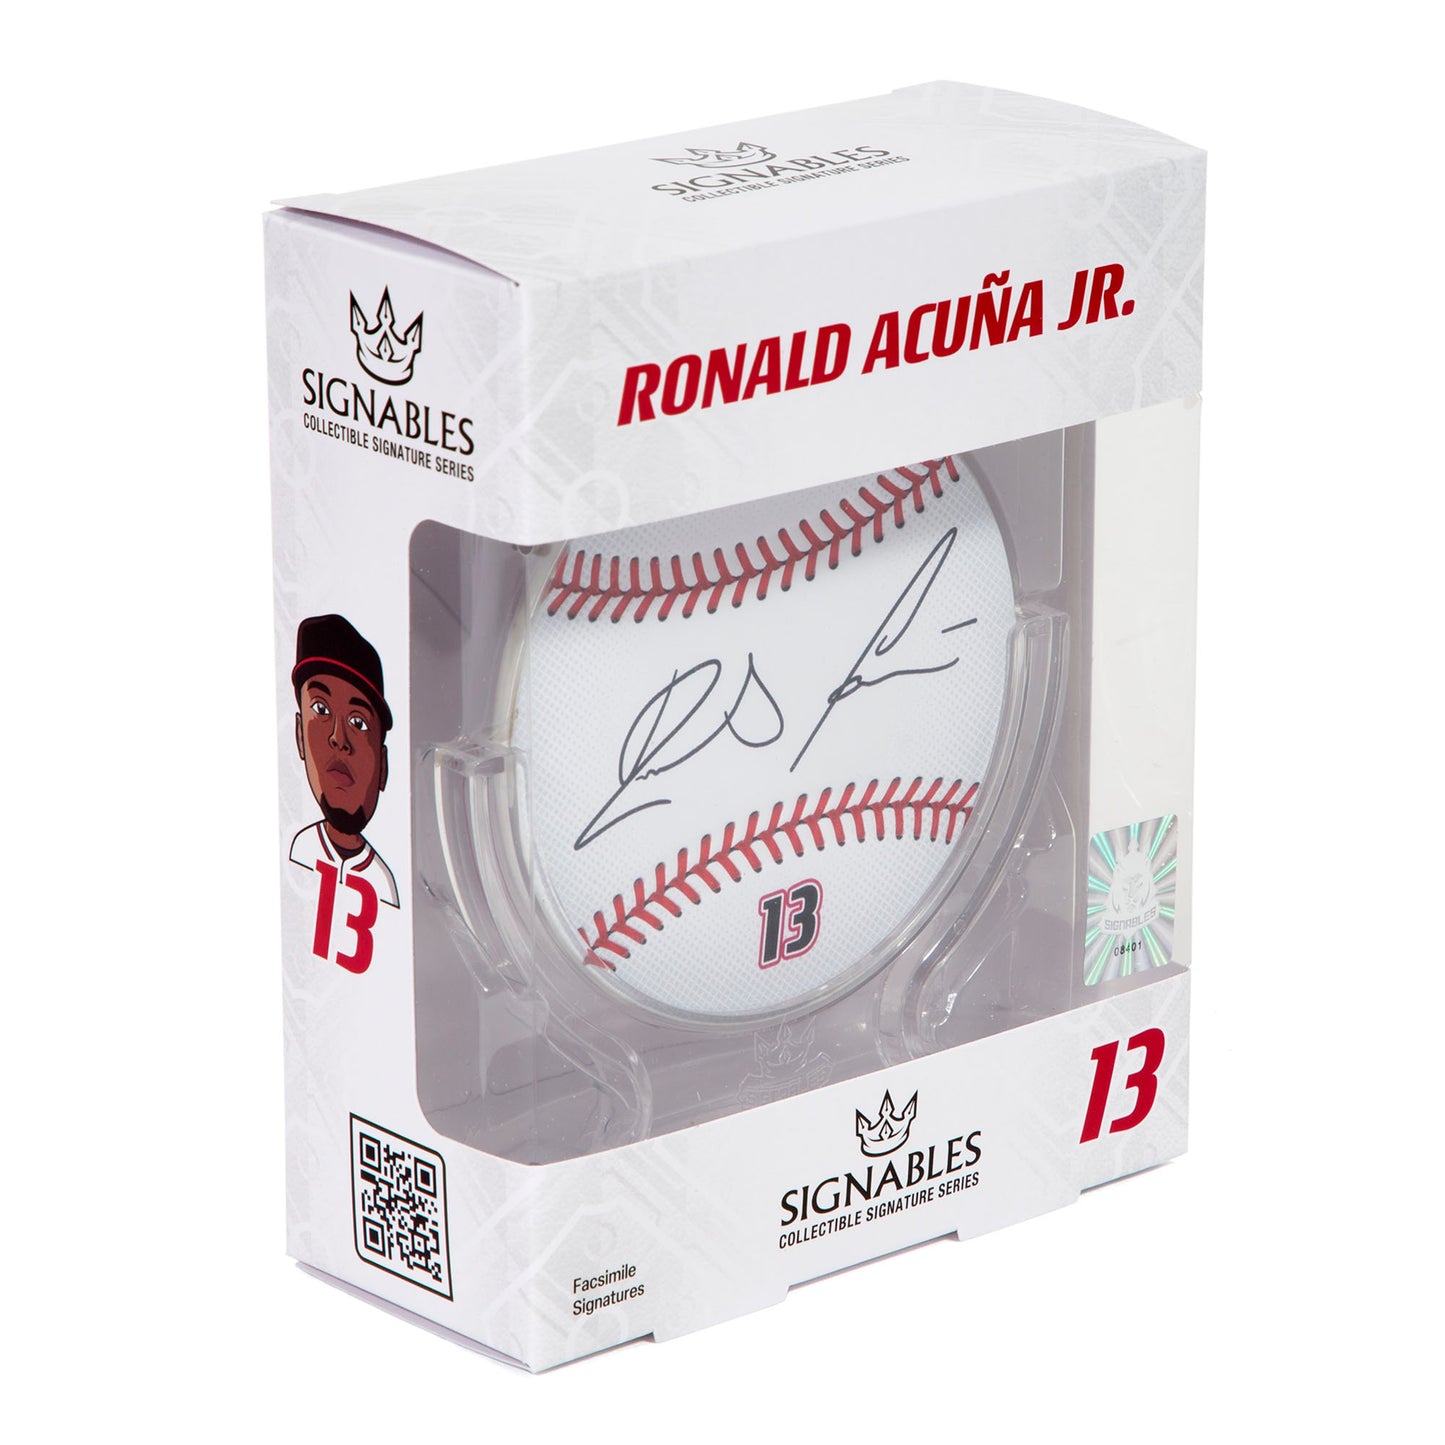 Ronald Acuña Jr. MLBPA Signables Sports Collectible Digitally Signed